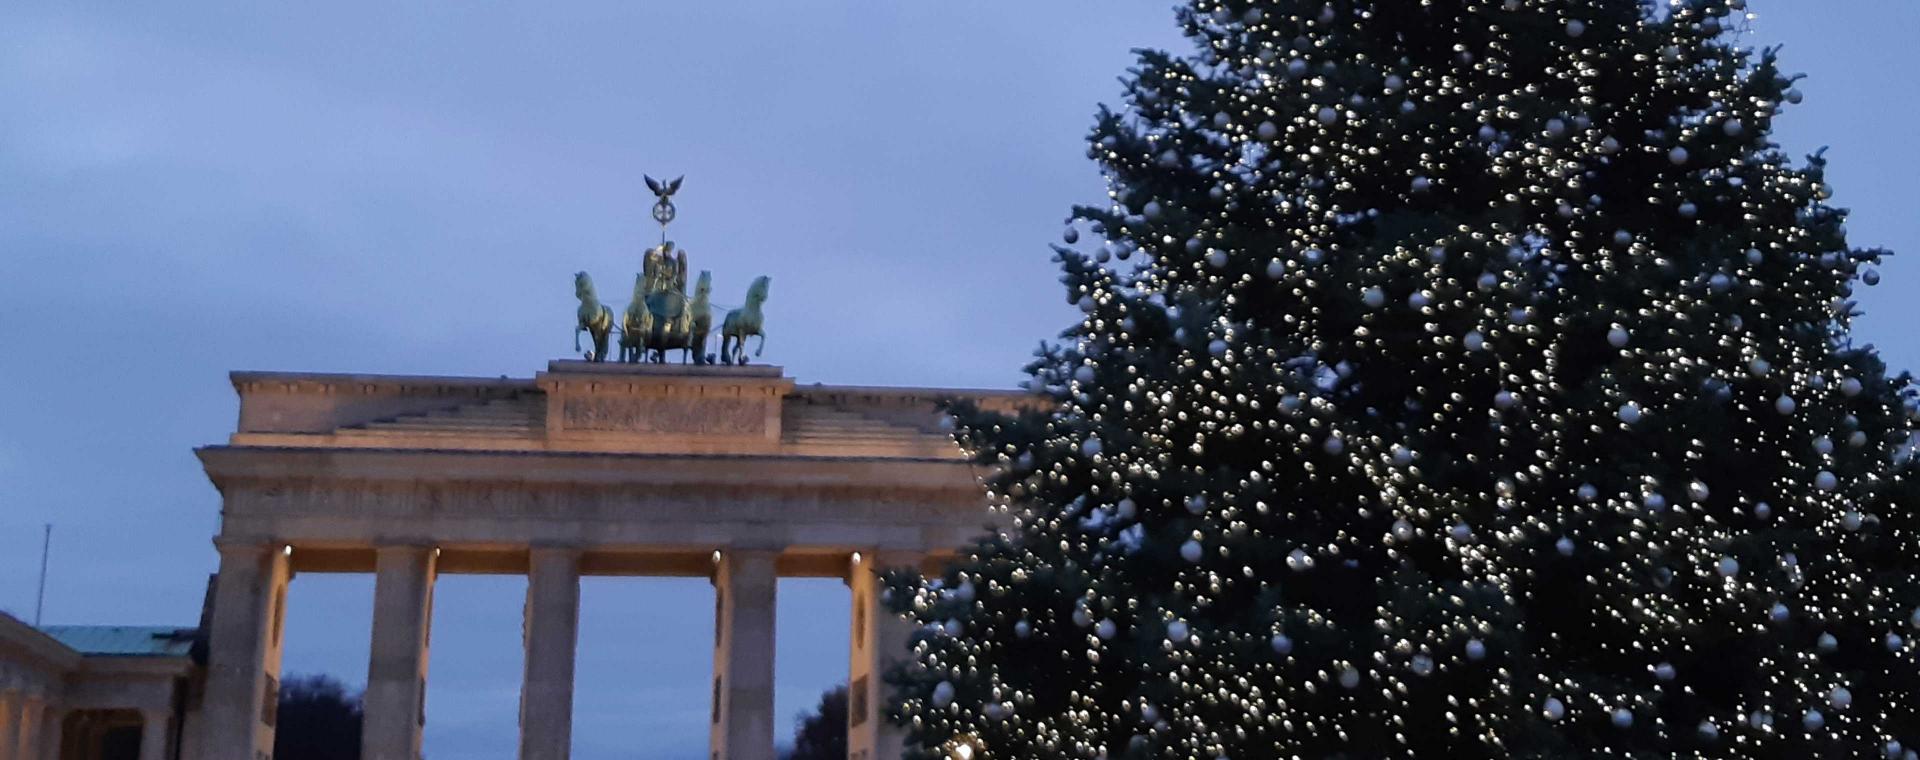 Christmas tree on Pariser Platz with the illuminated Brandenburg Gate in the background